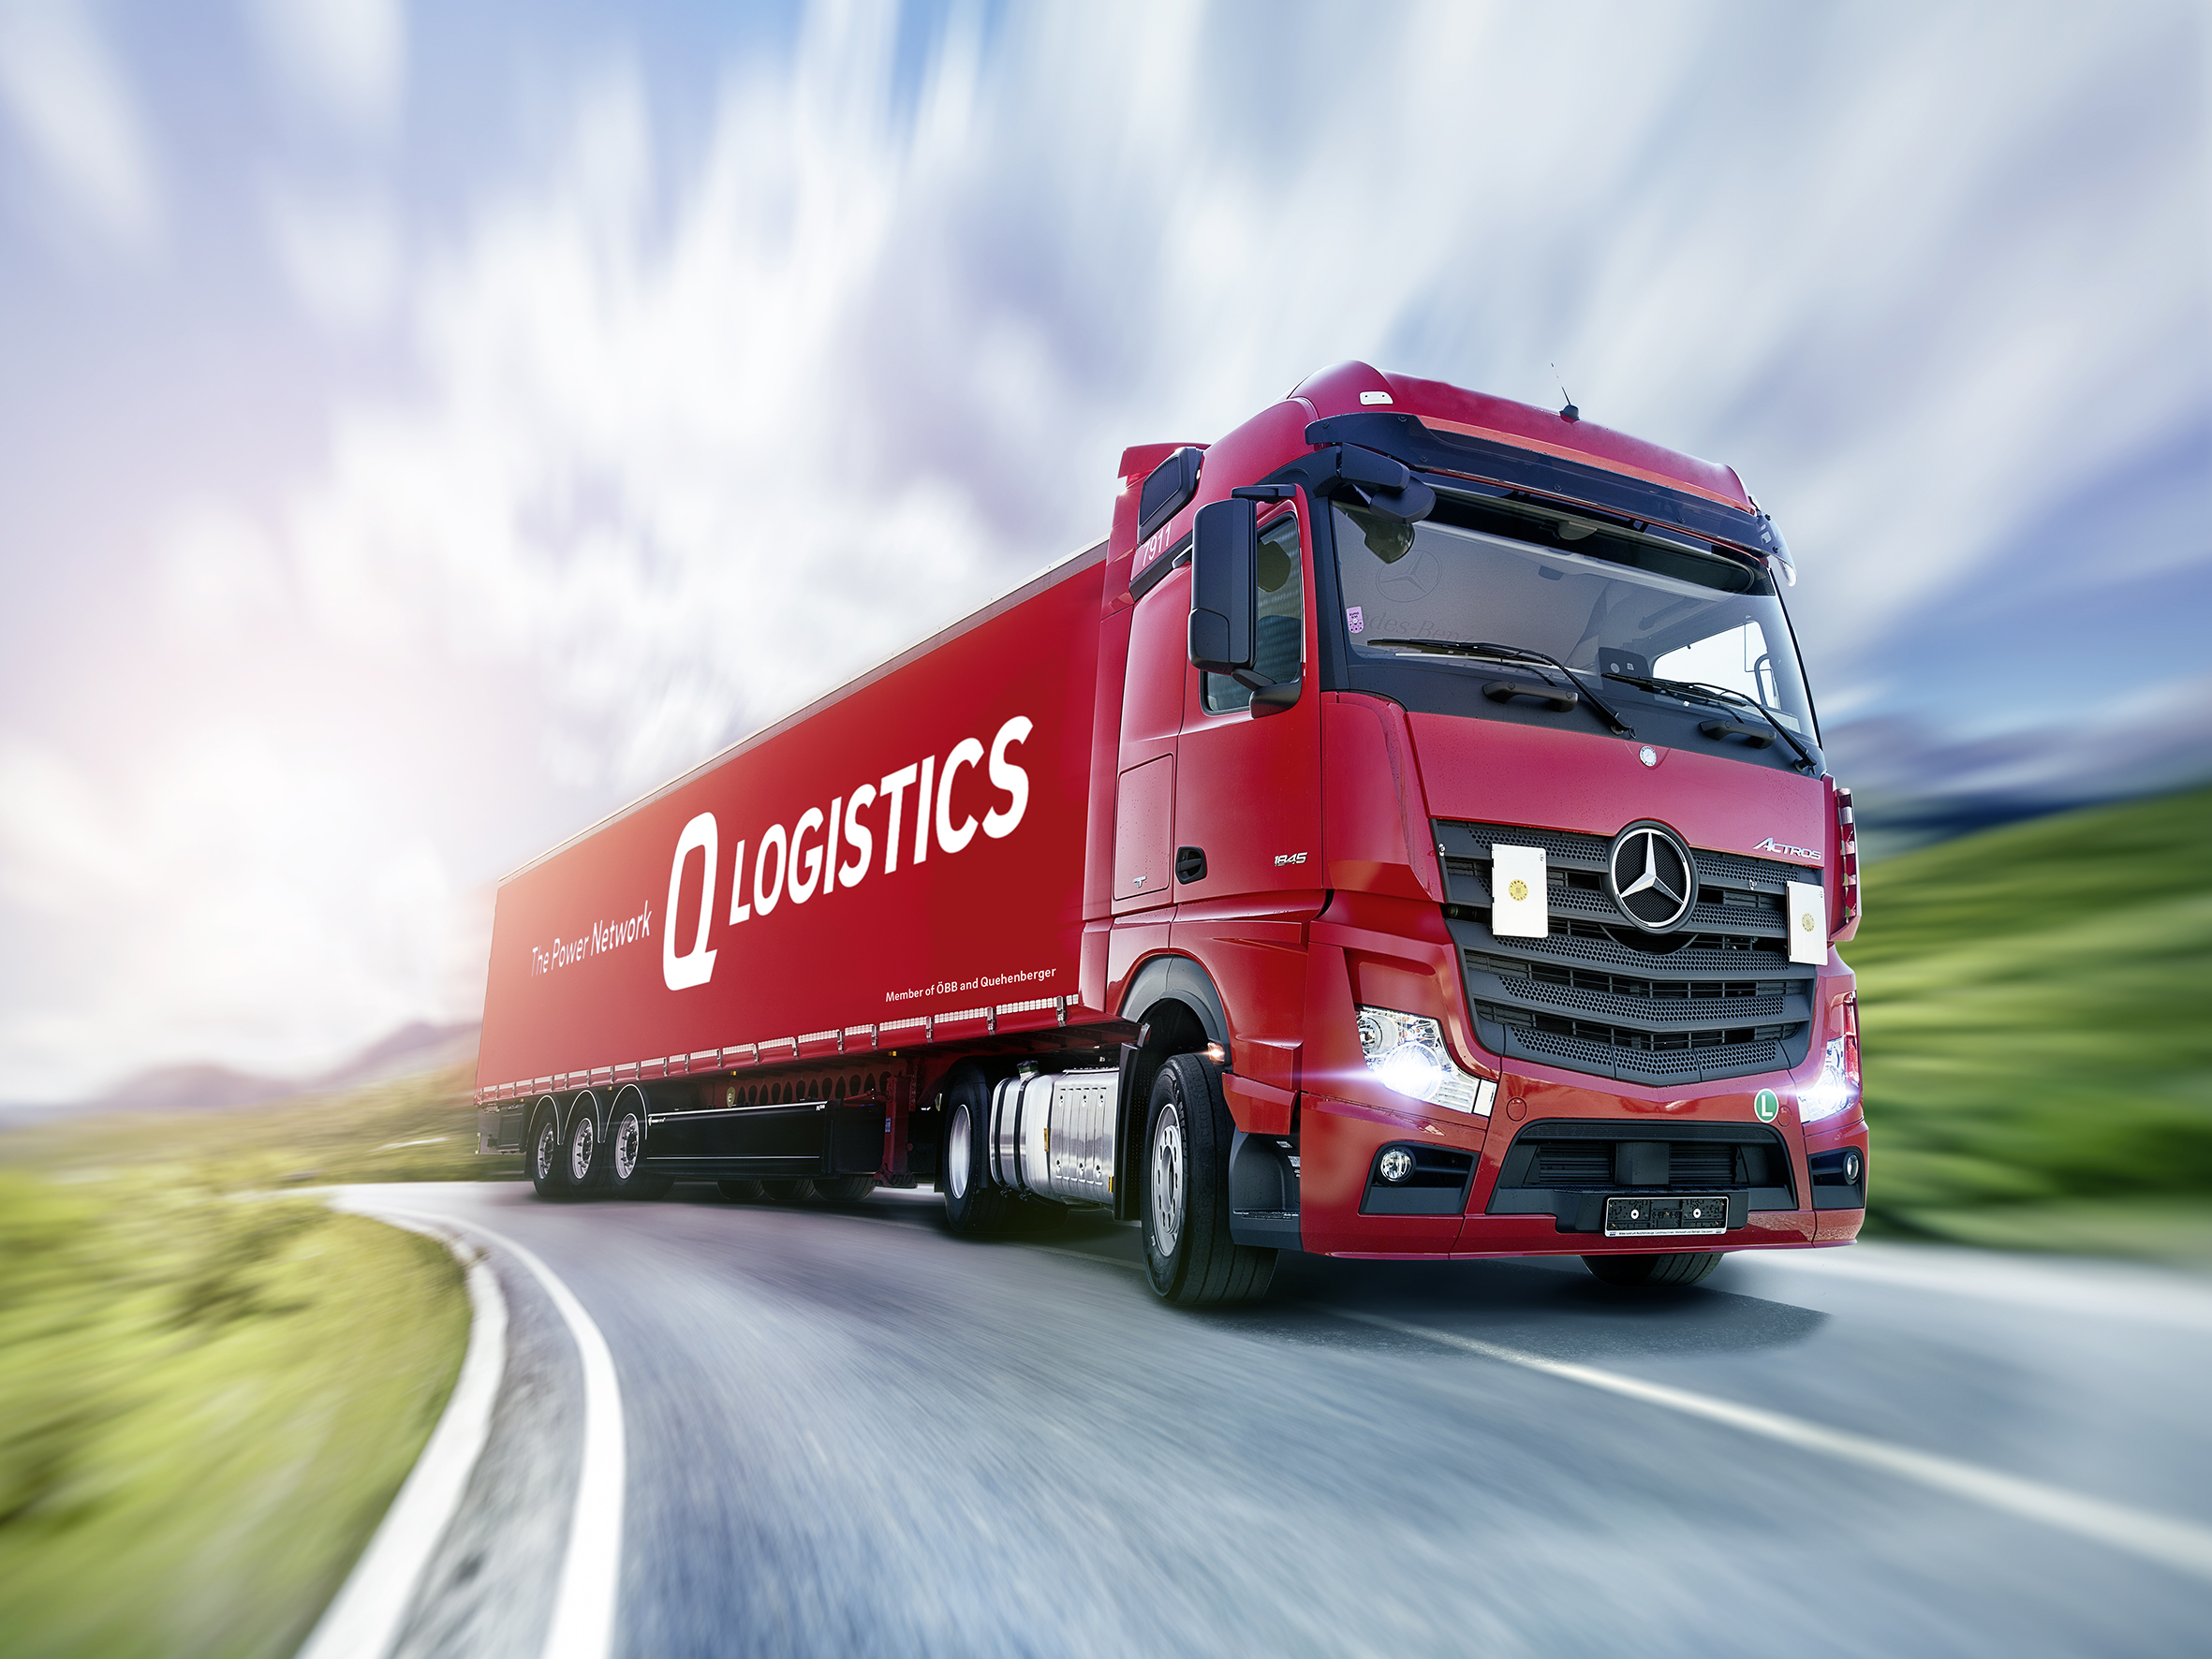 Q Logistics: a new star on Austria’s general cargo market